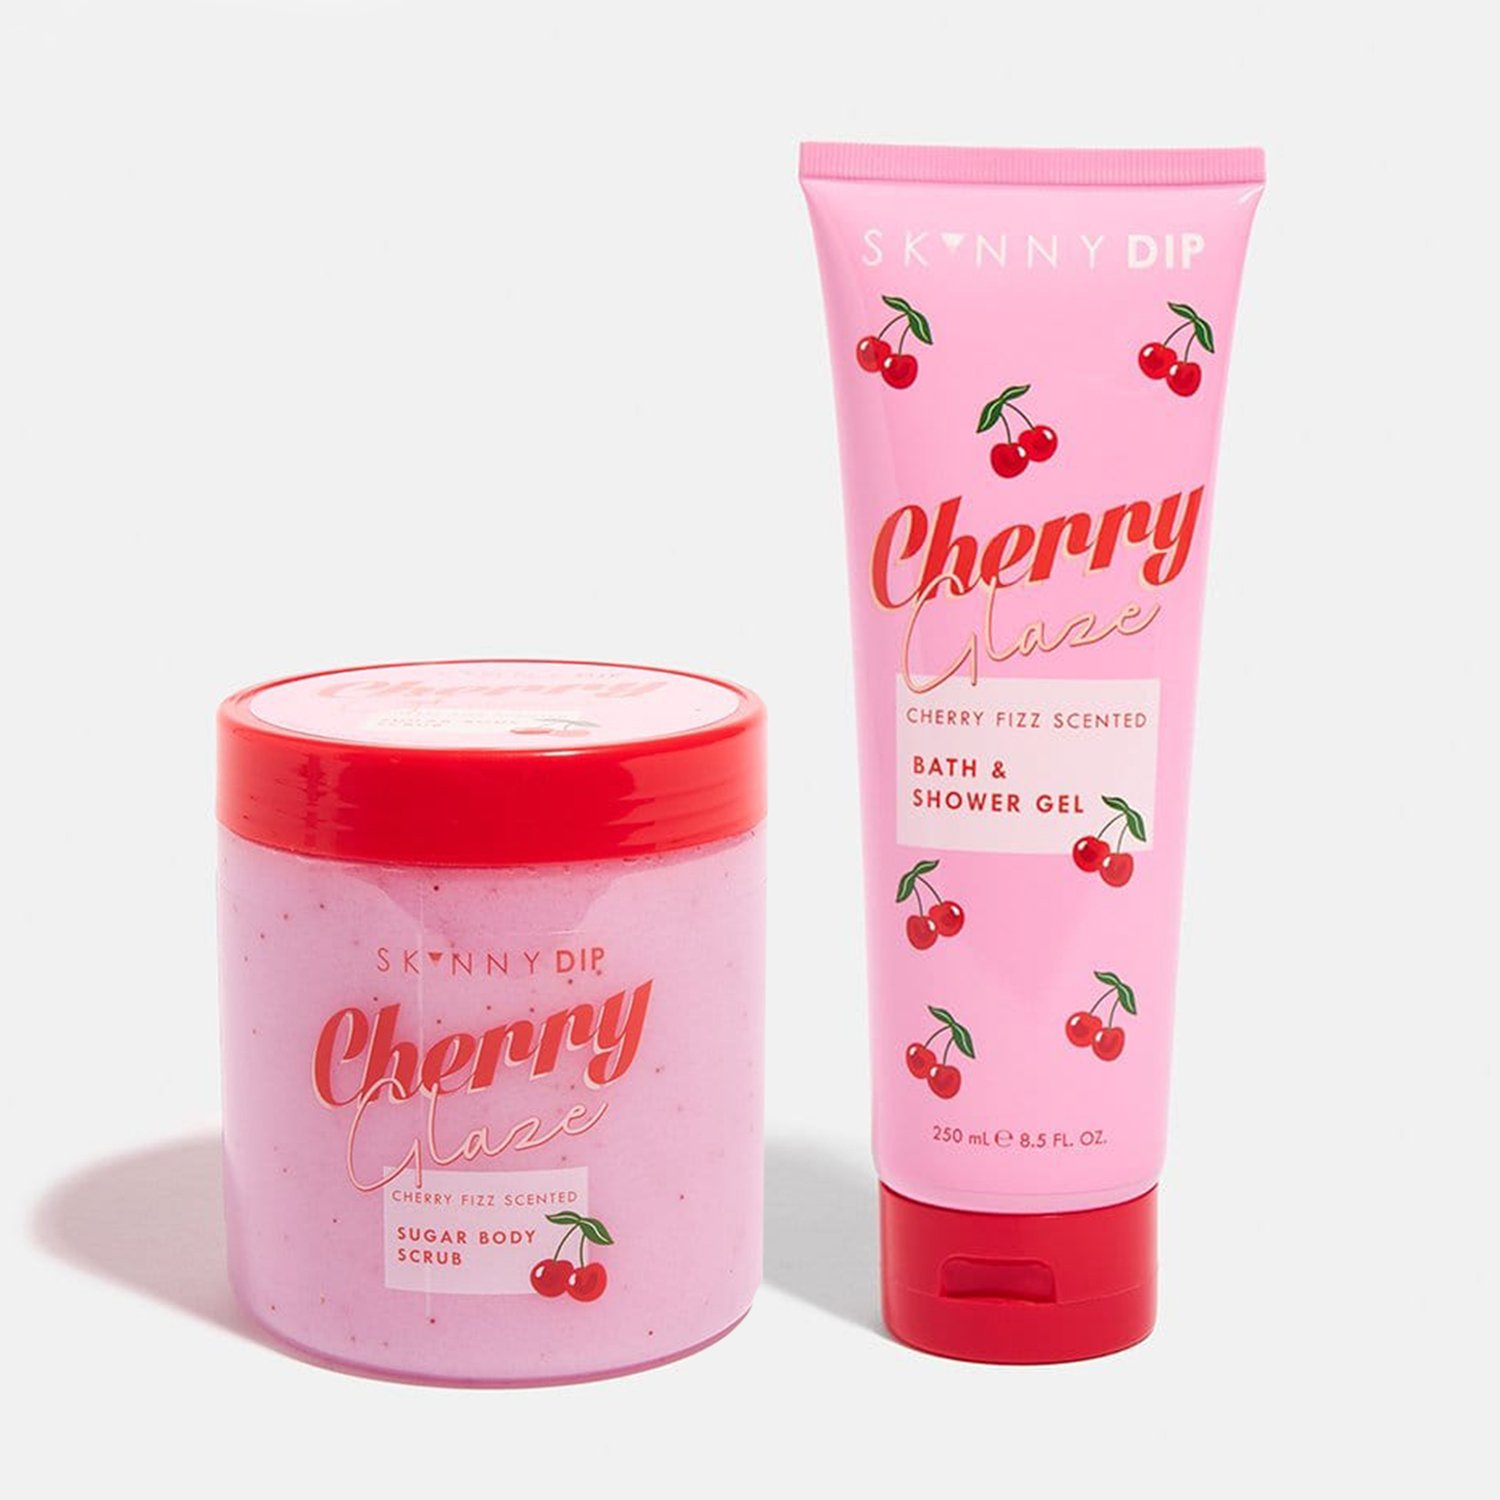 Skinnydip Skinny Dip Cherry Shower Gel & Body Scrub